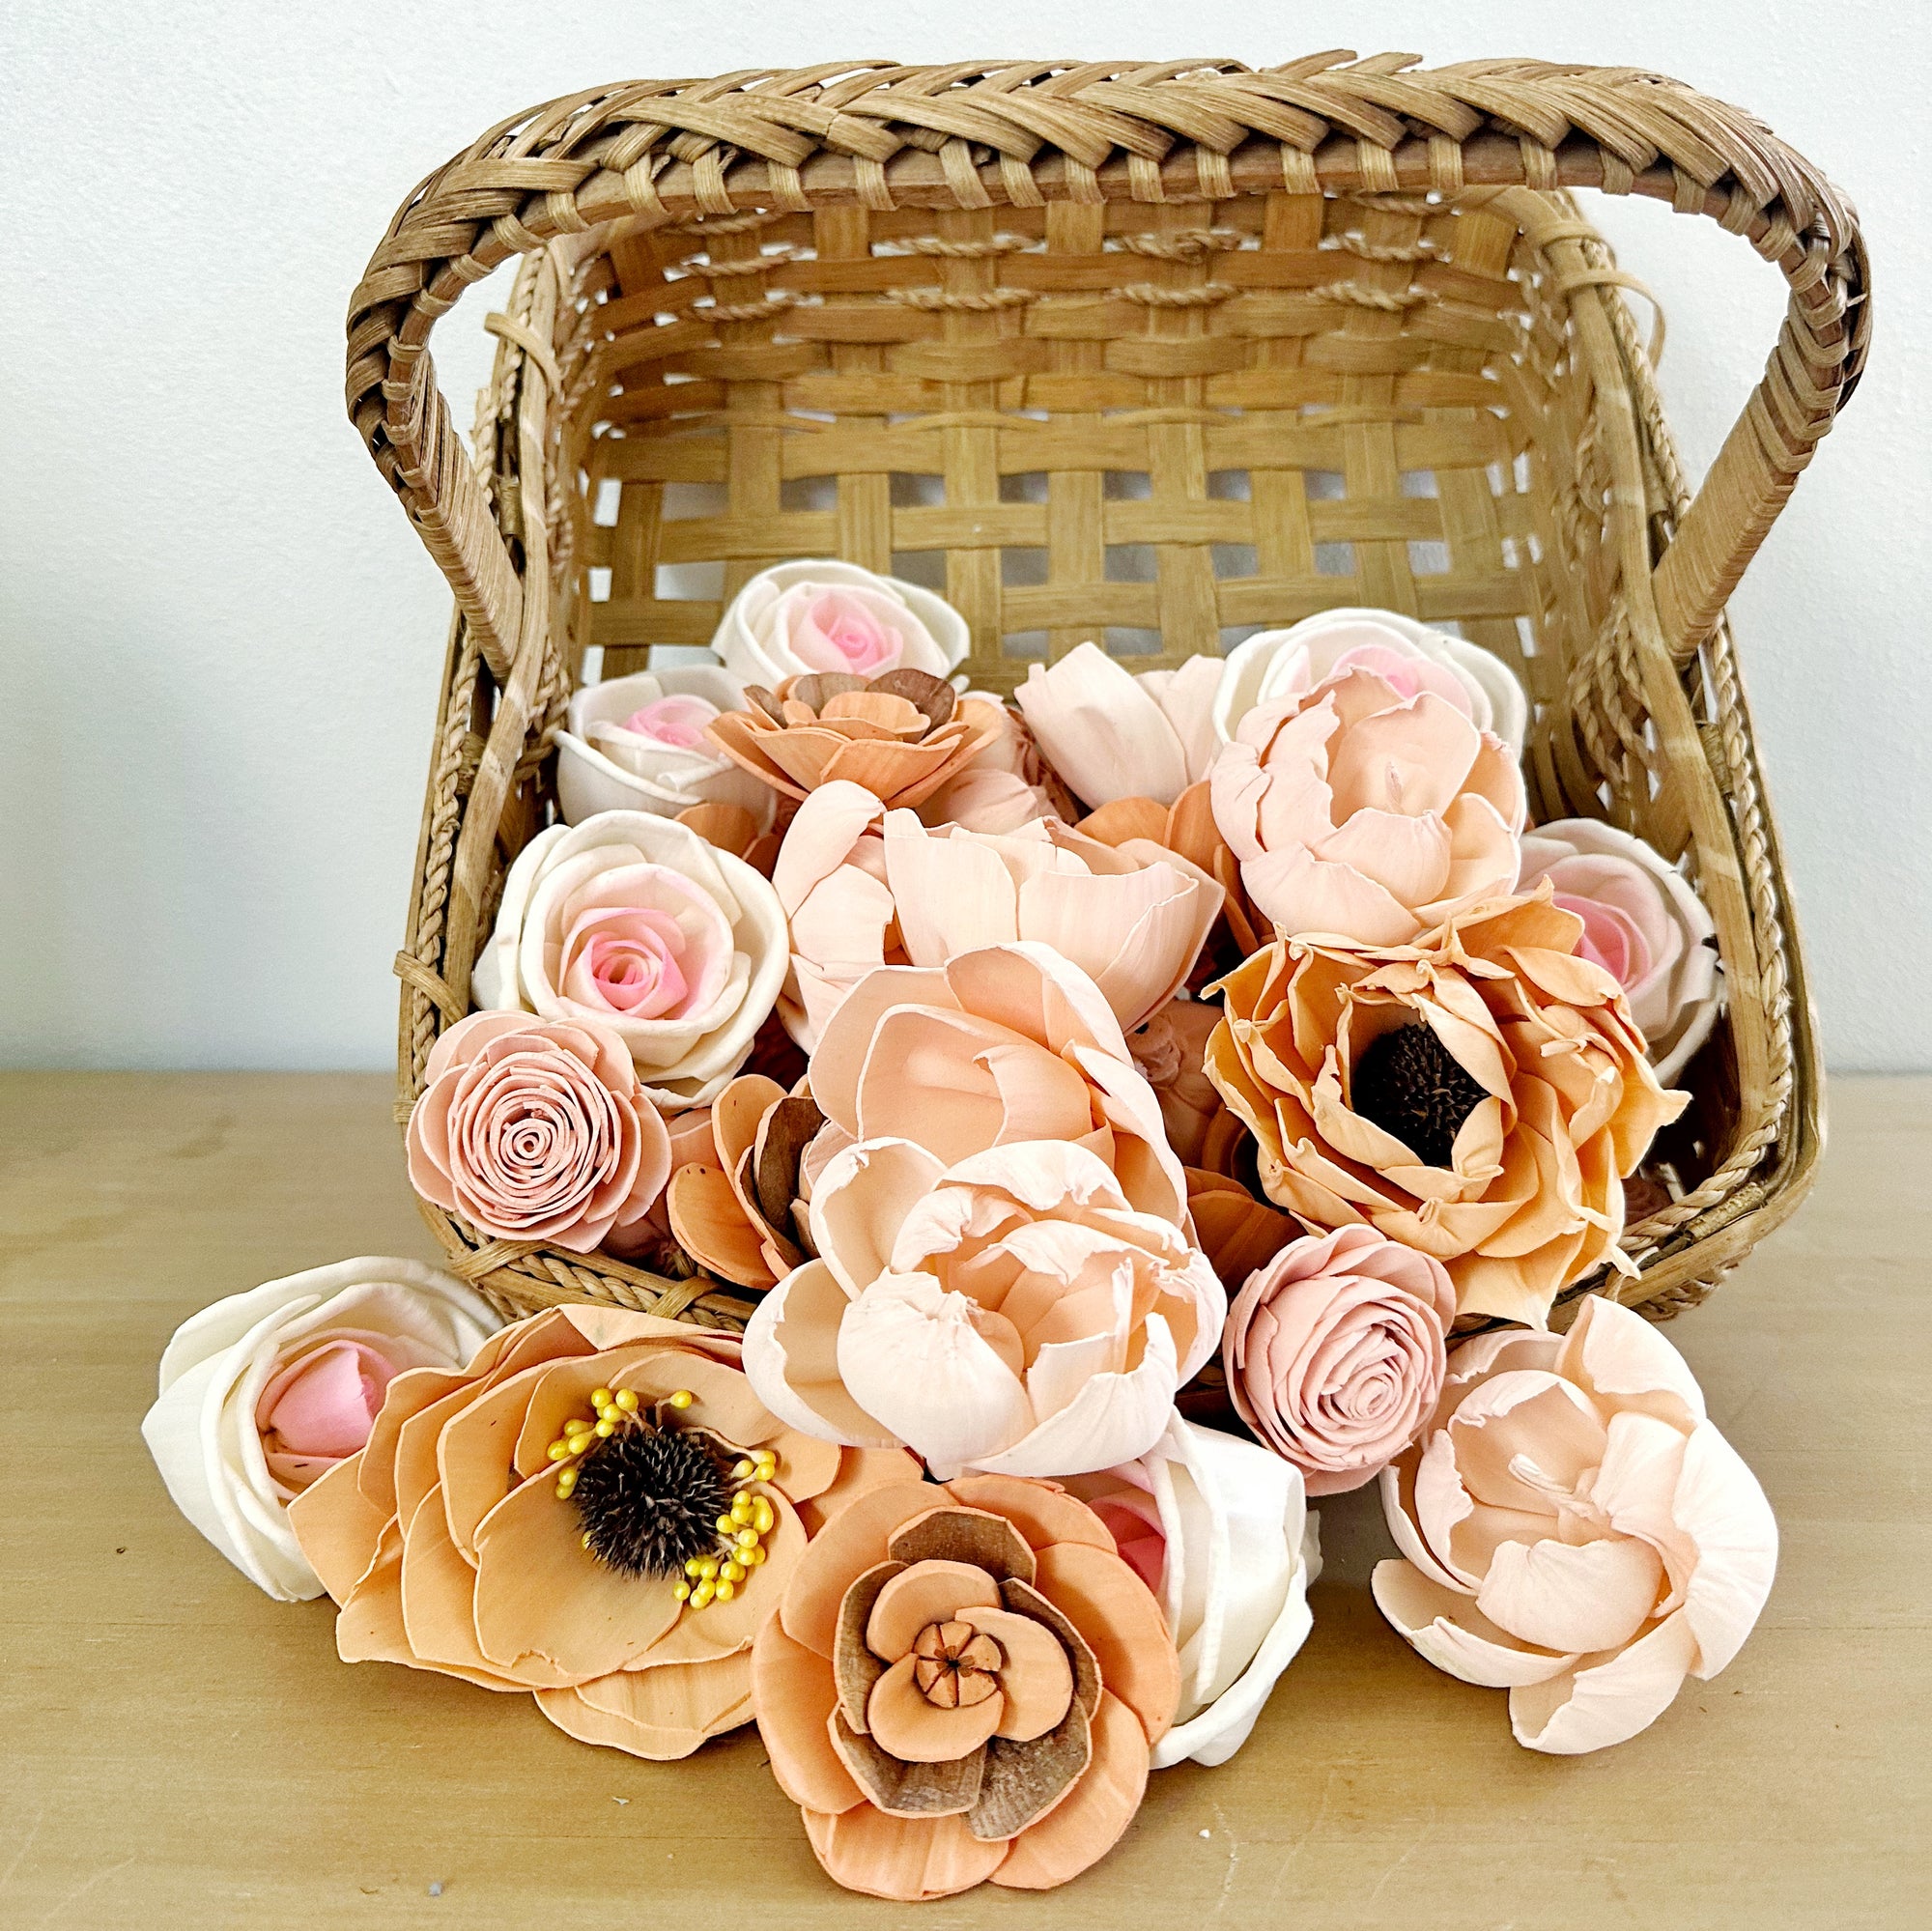 Blushing Peach- dyed sola wood flower assortment